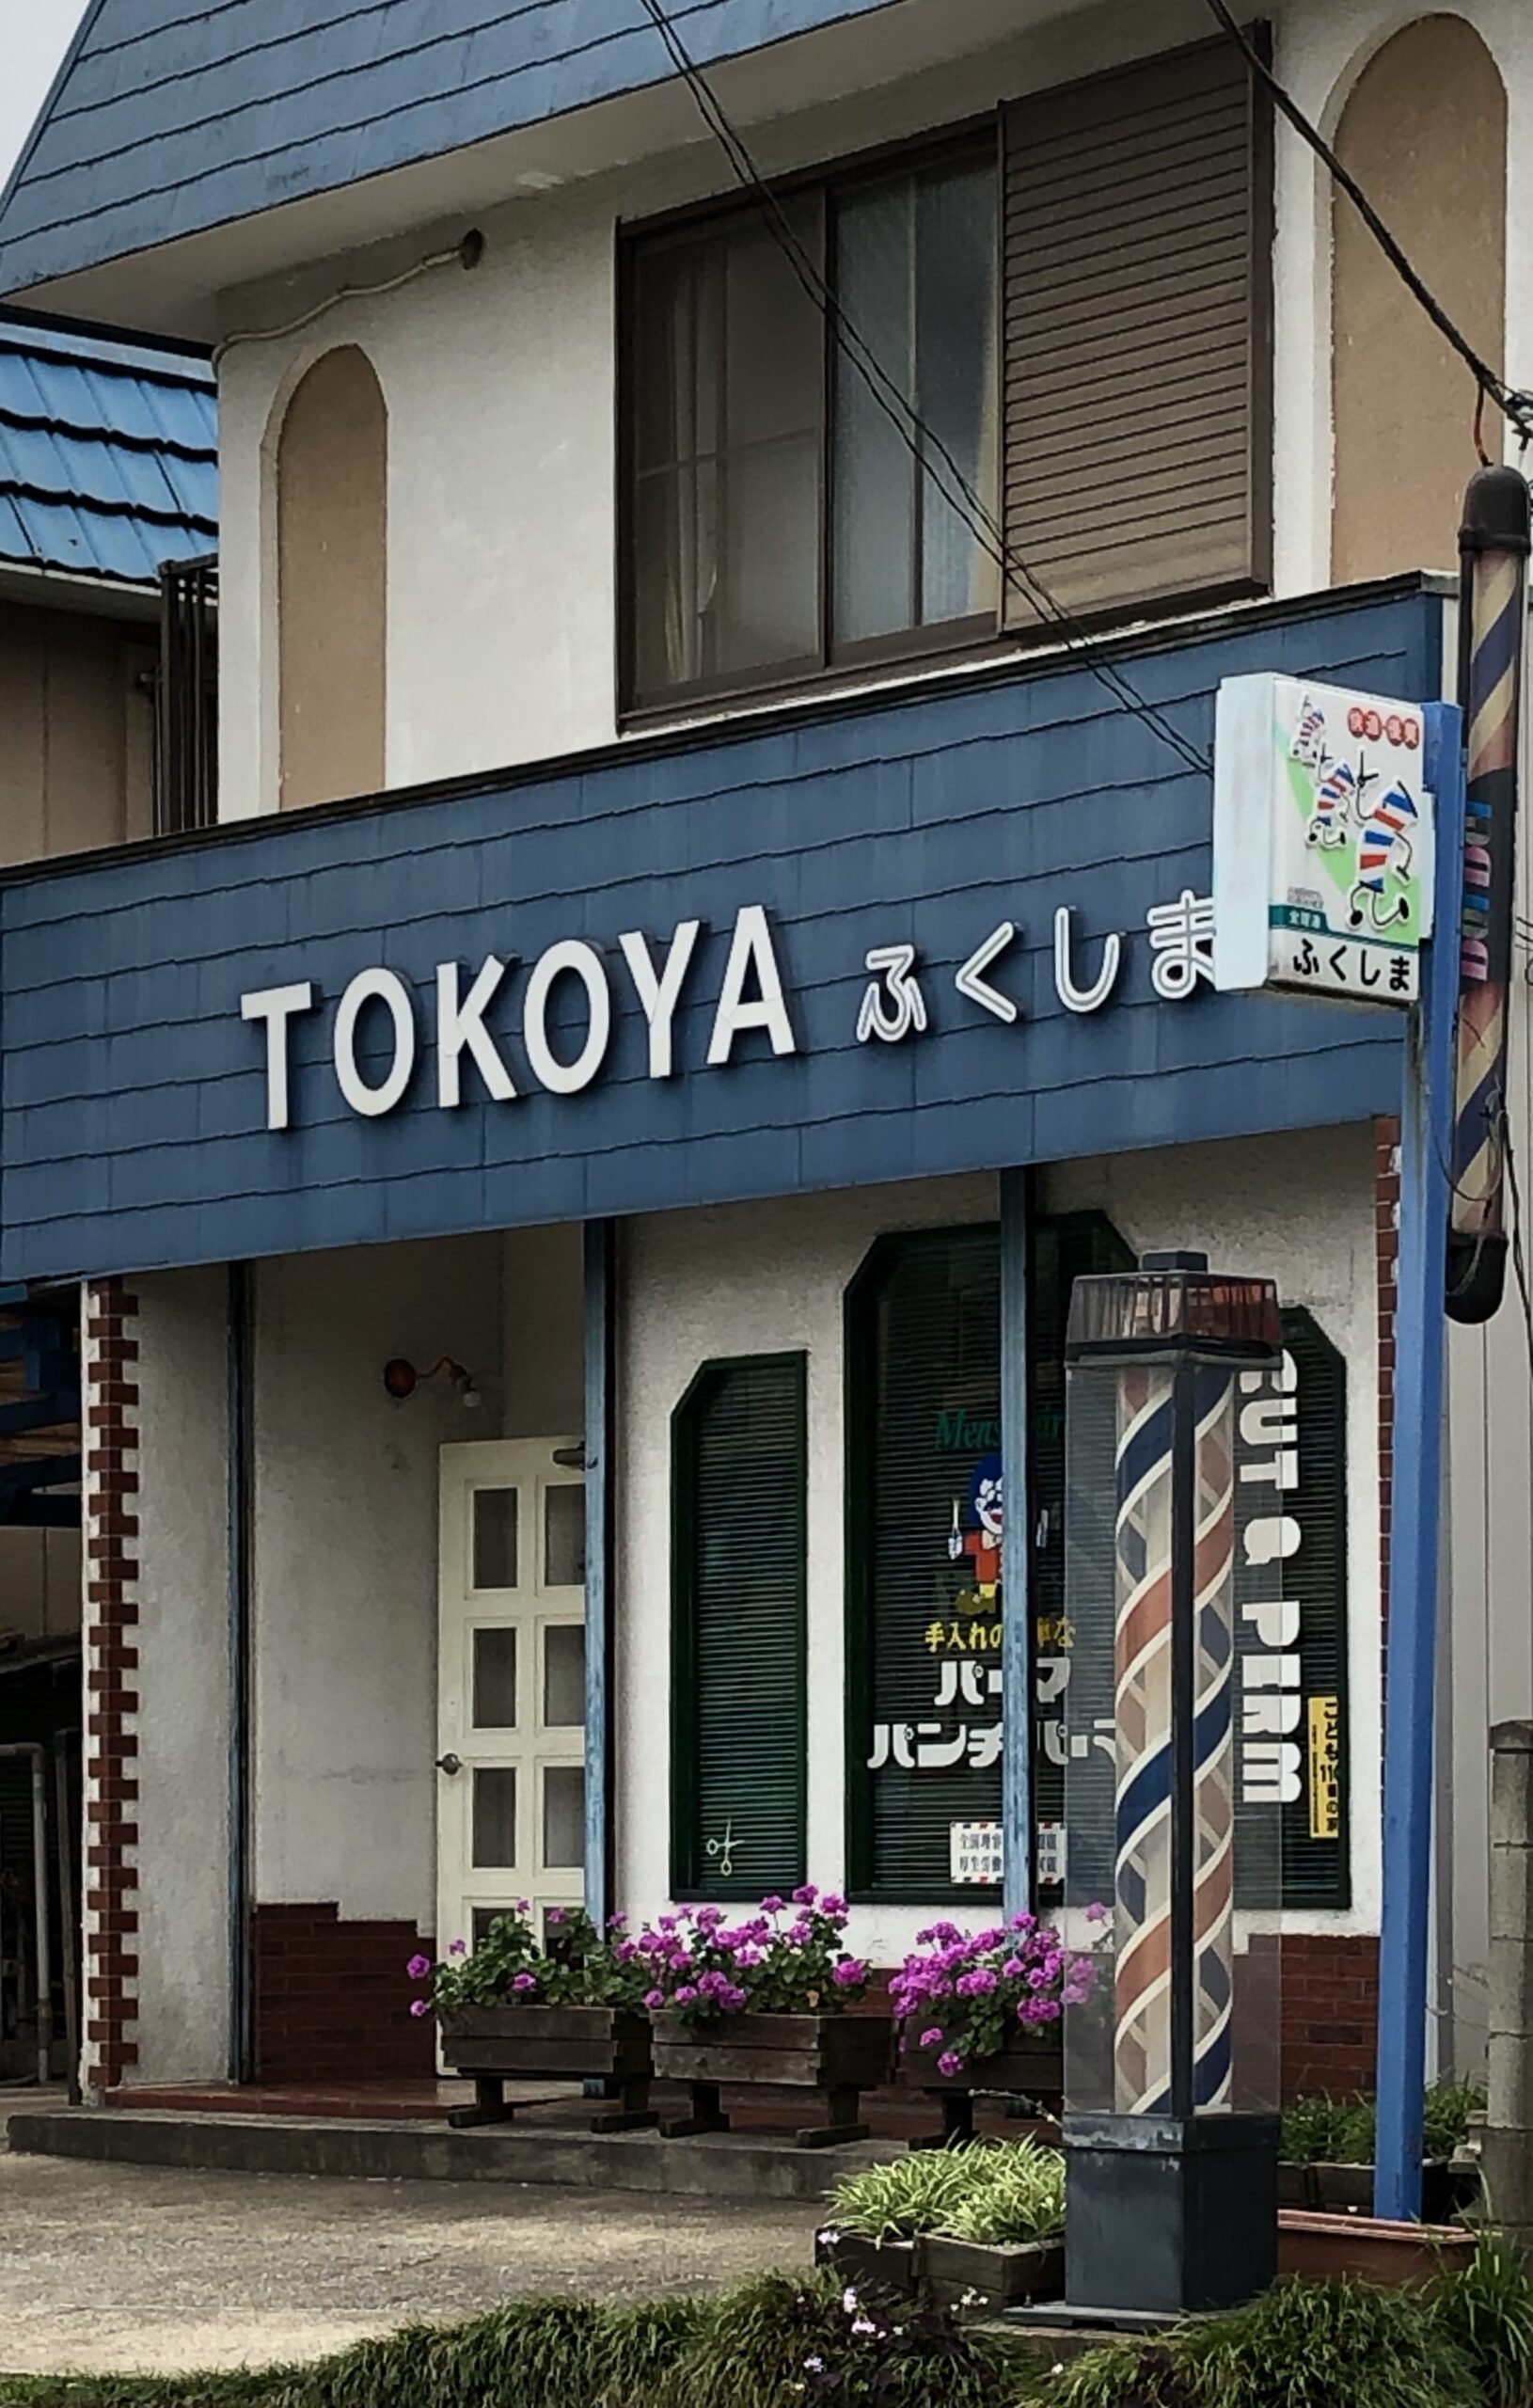 Tokoya ふくしま